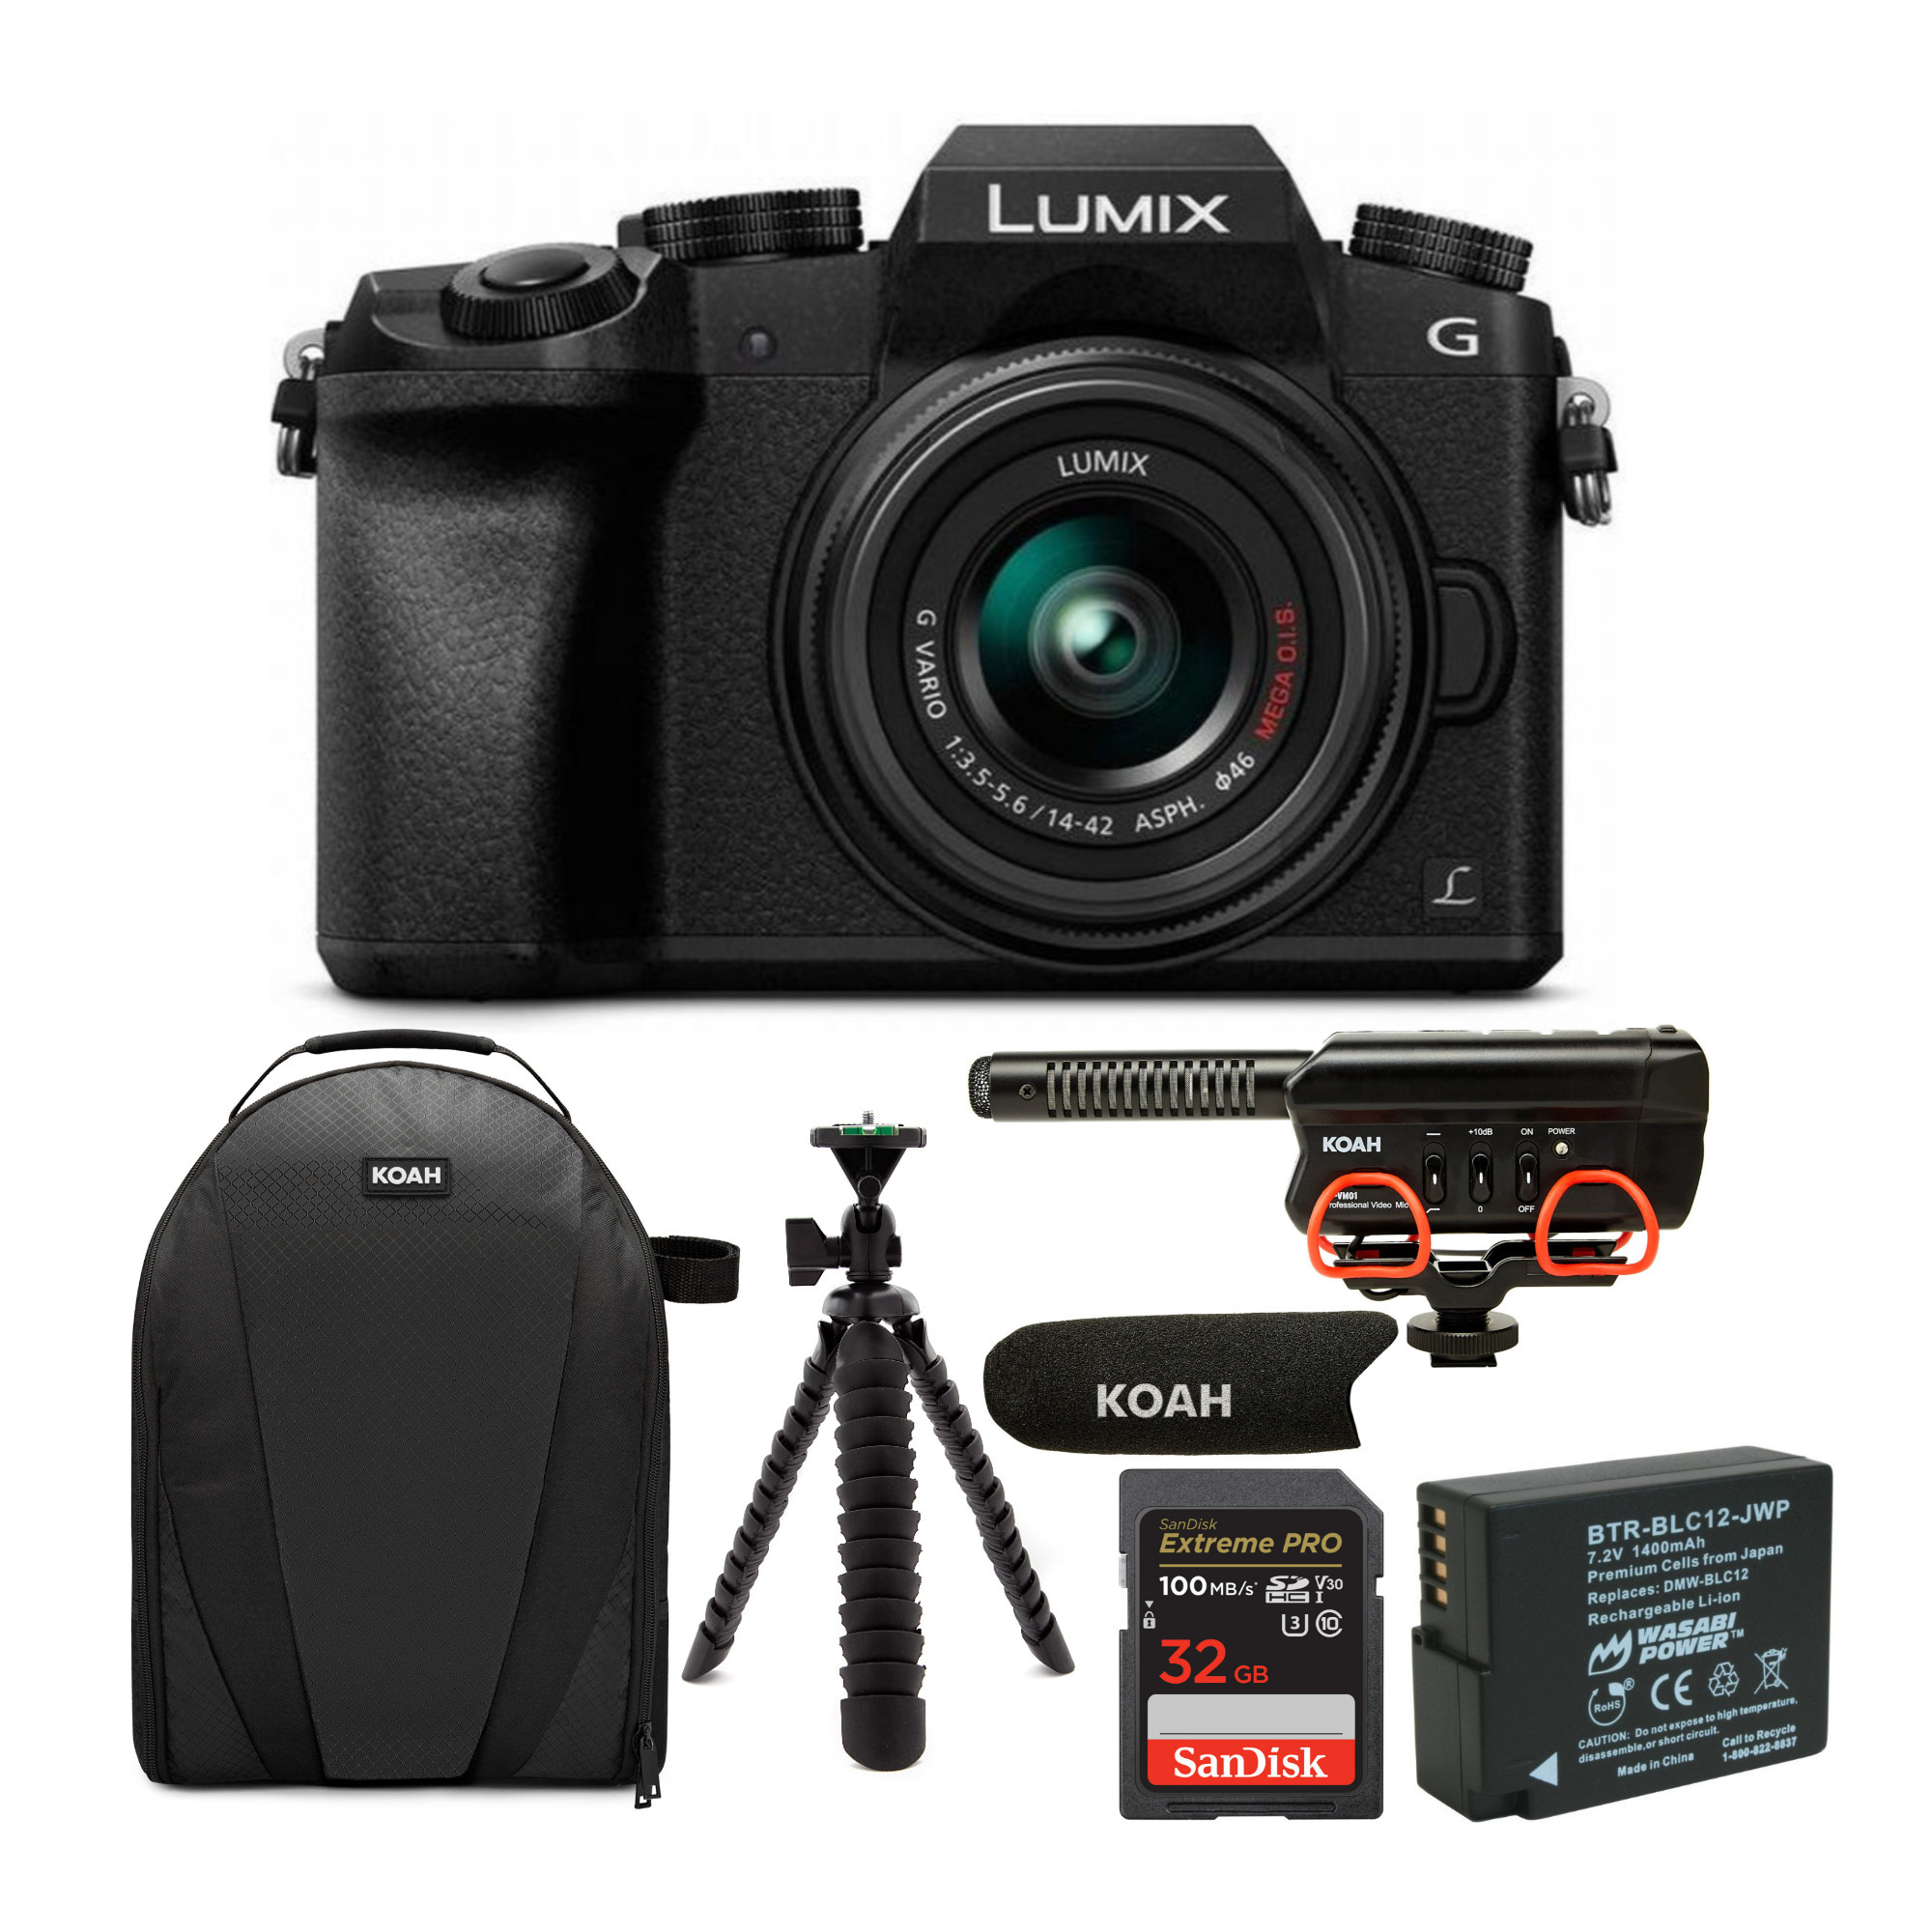 Panasonic LUMIX G7 Mirrorless Camera with 14-42mm Camera Lens and Koah Microphone Bundle in Black